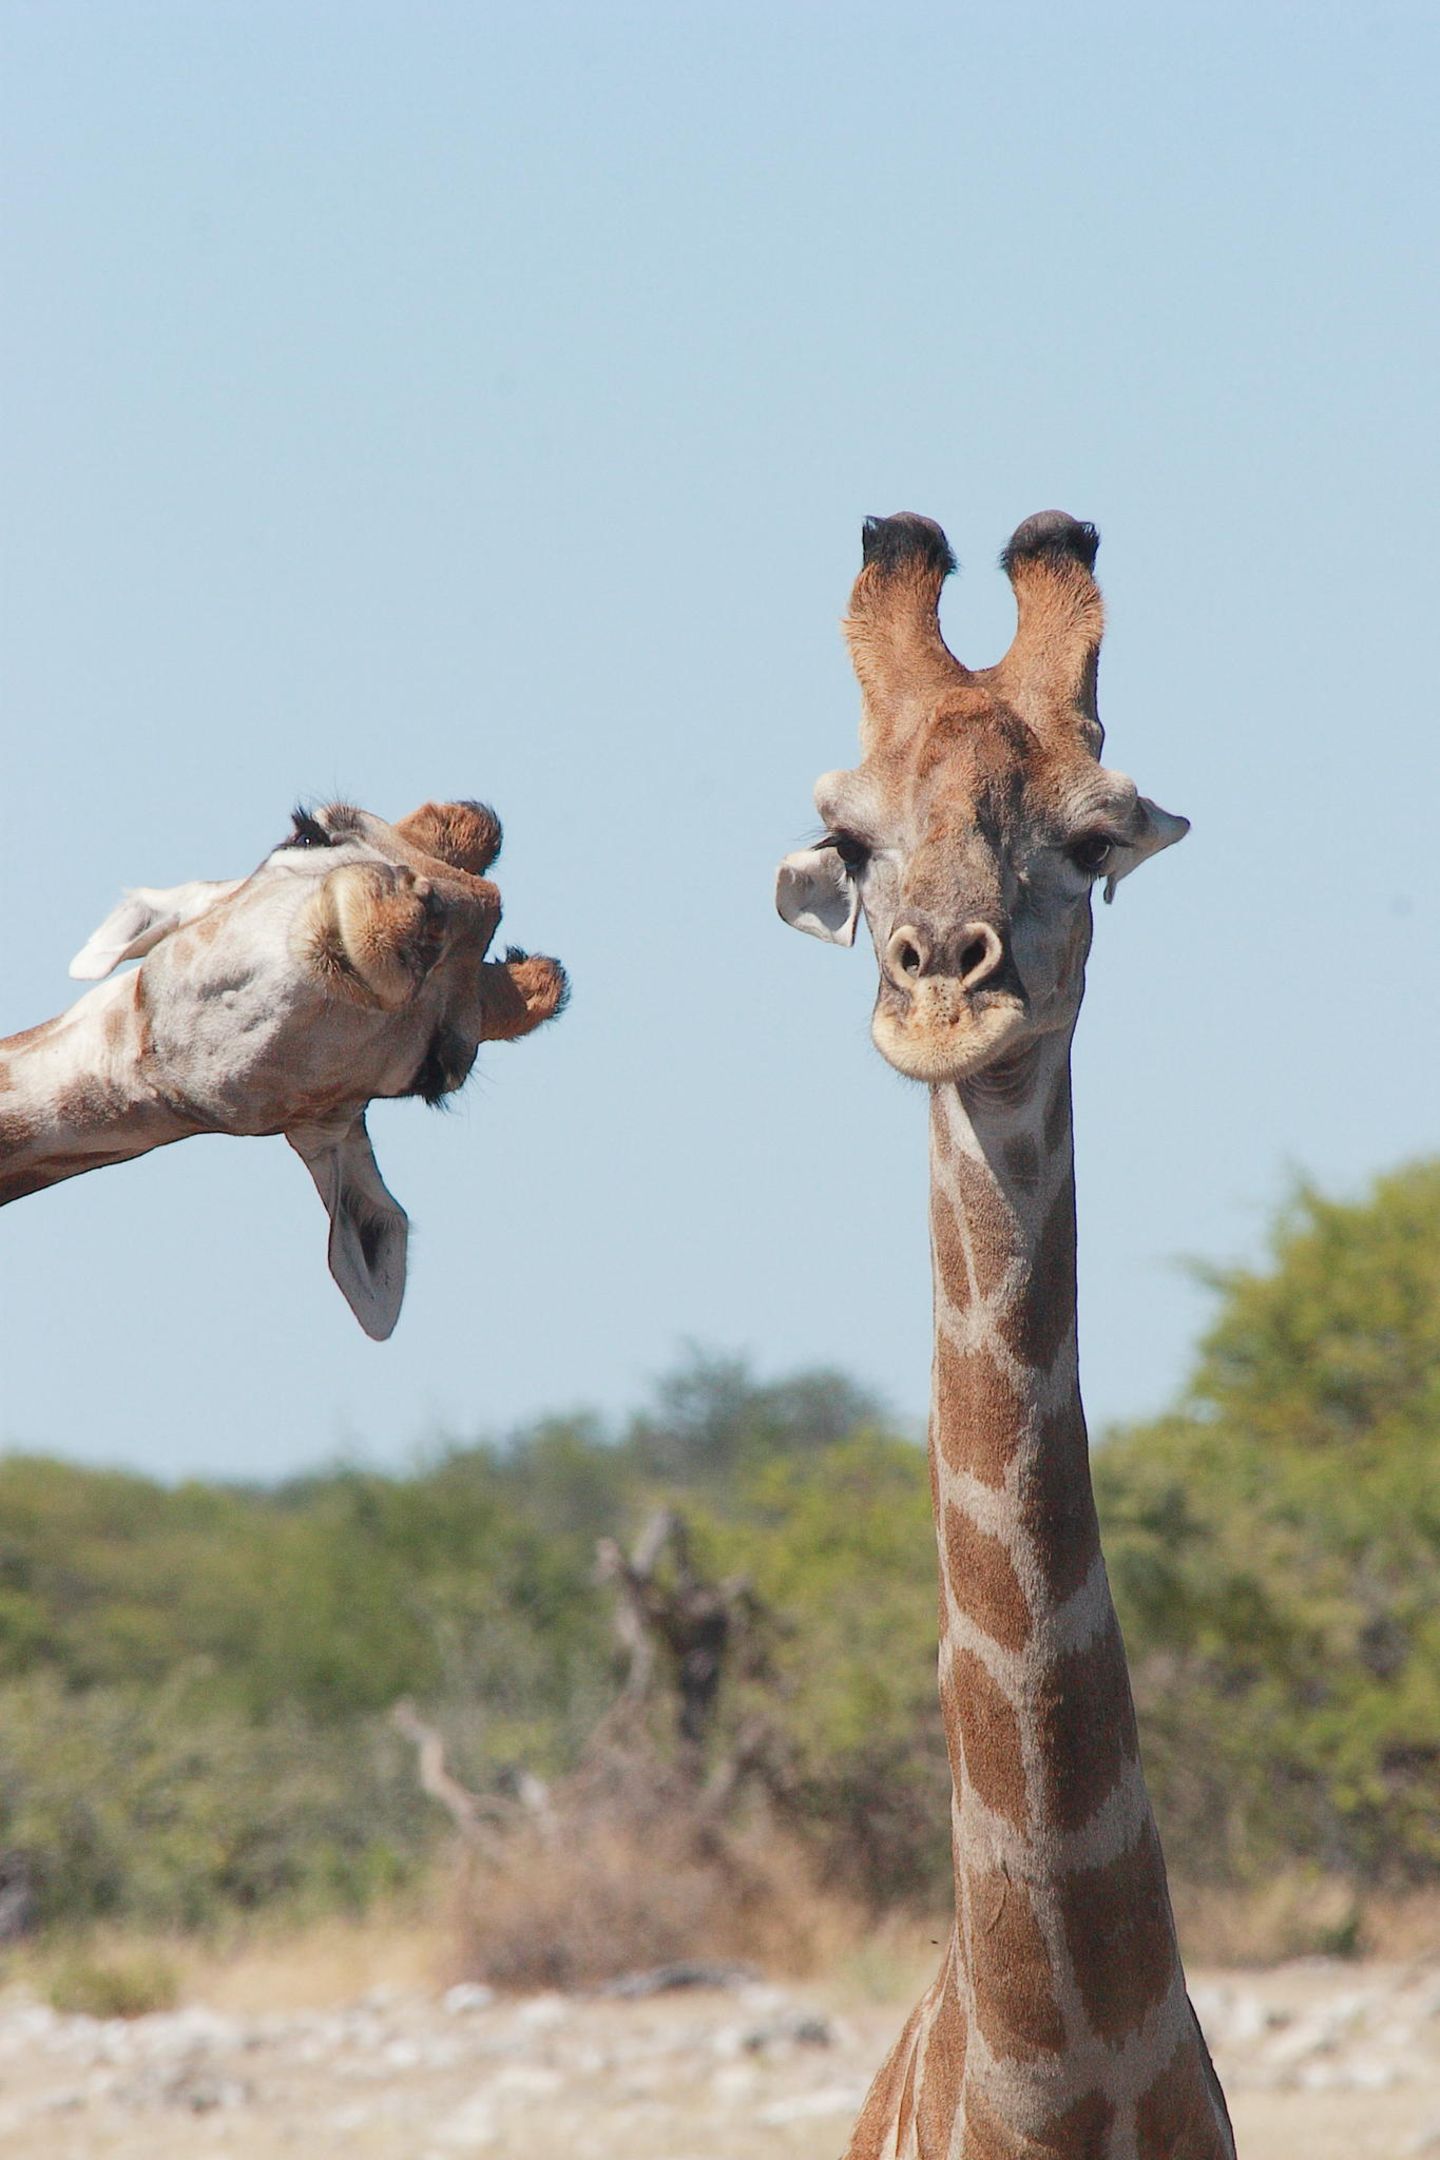 Comedy Wildlife Photo Awards 2020: Giraffen